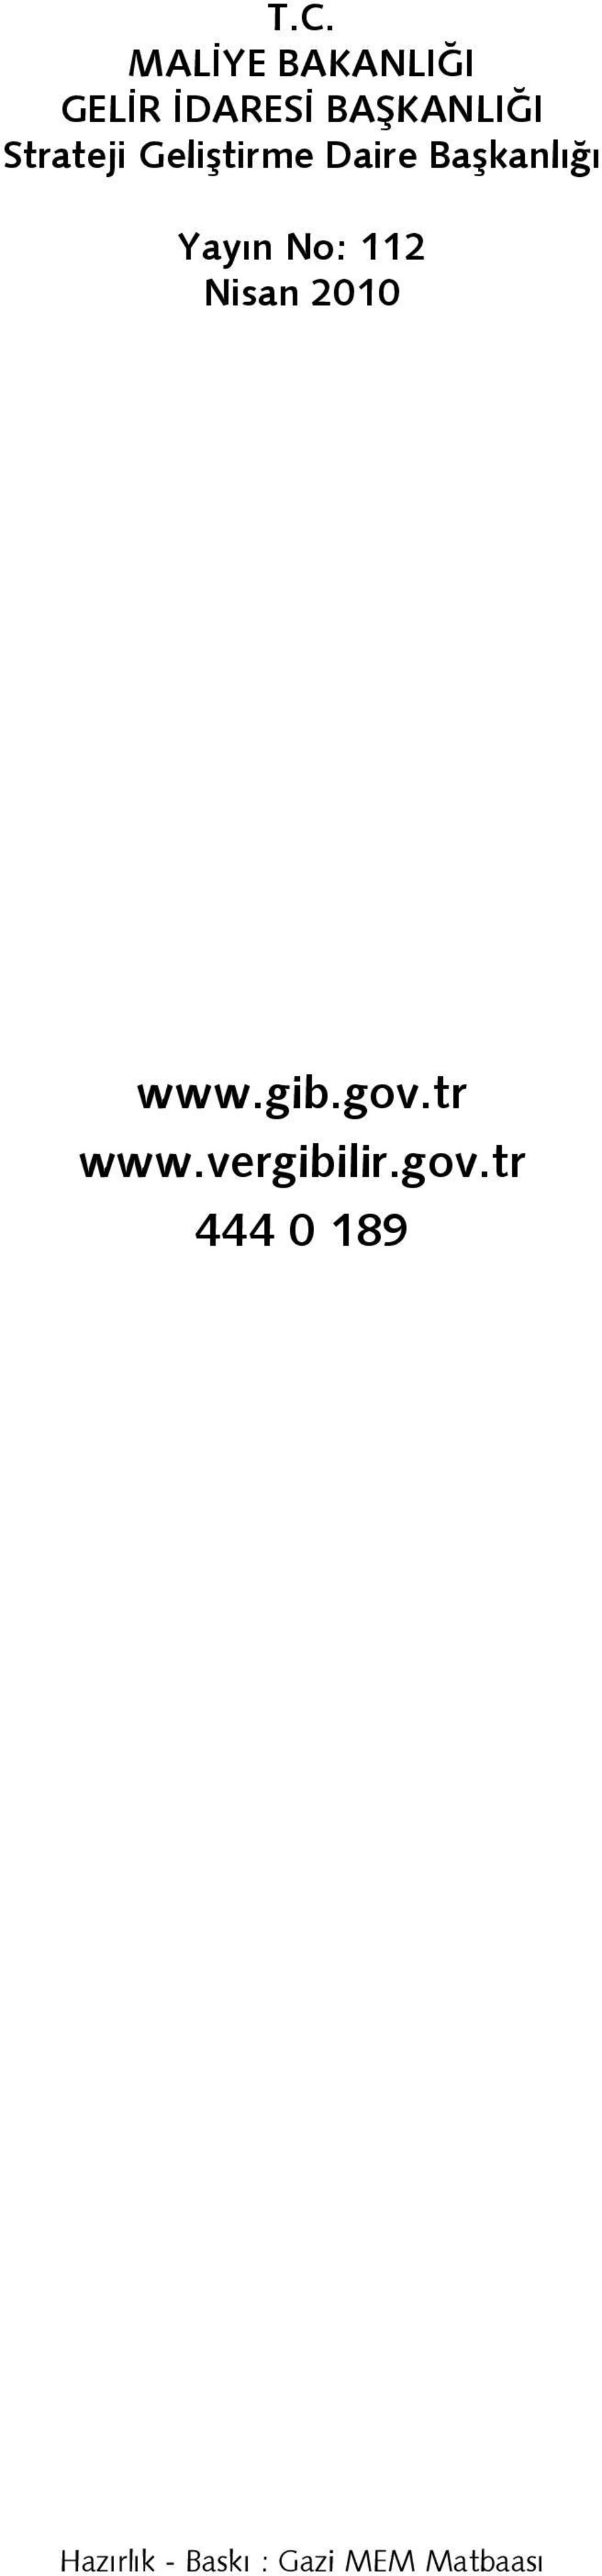 112 Nisan 2010 www.gib.gov.tr www.vergibilir.